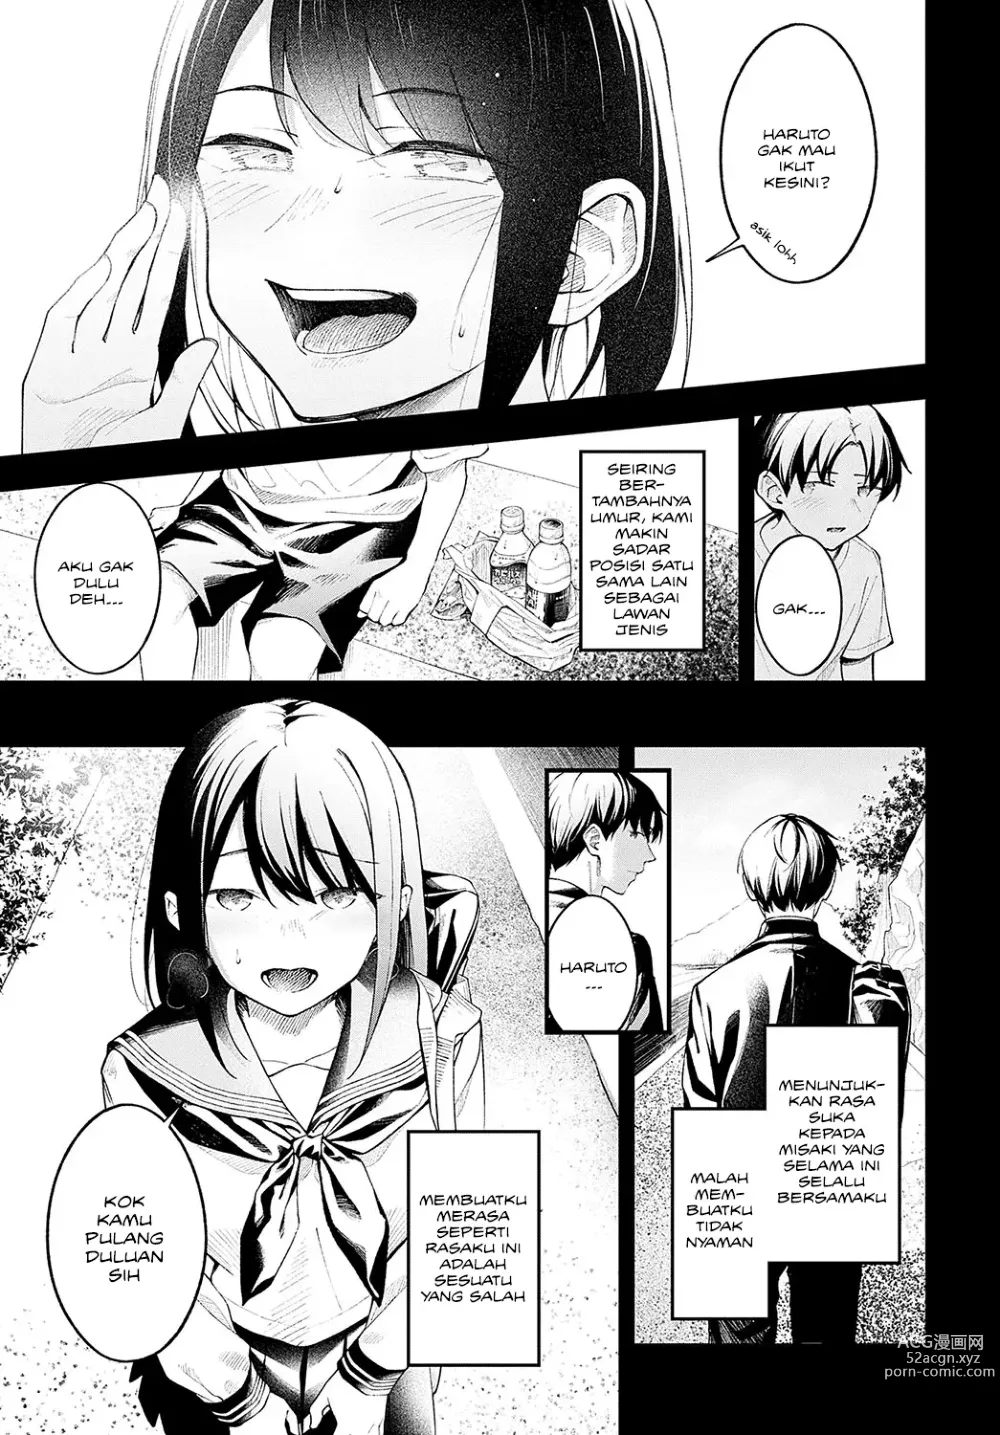 Page 5 of manga Panasnya Pas